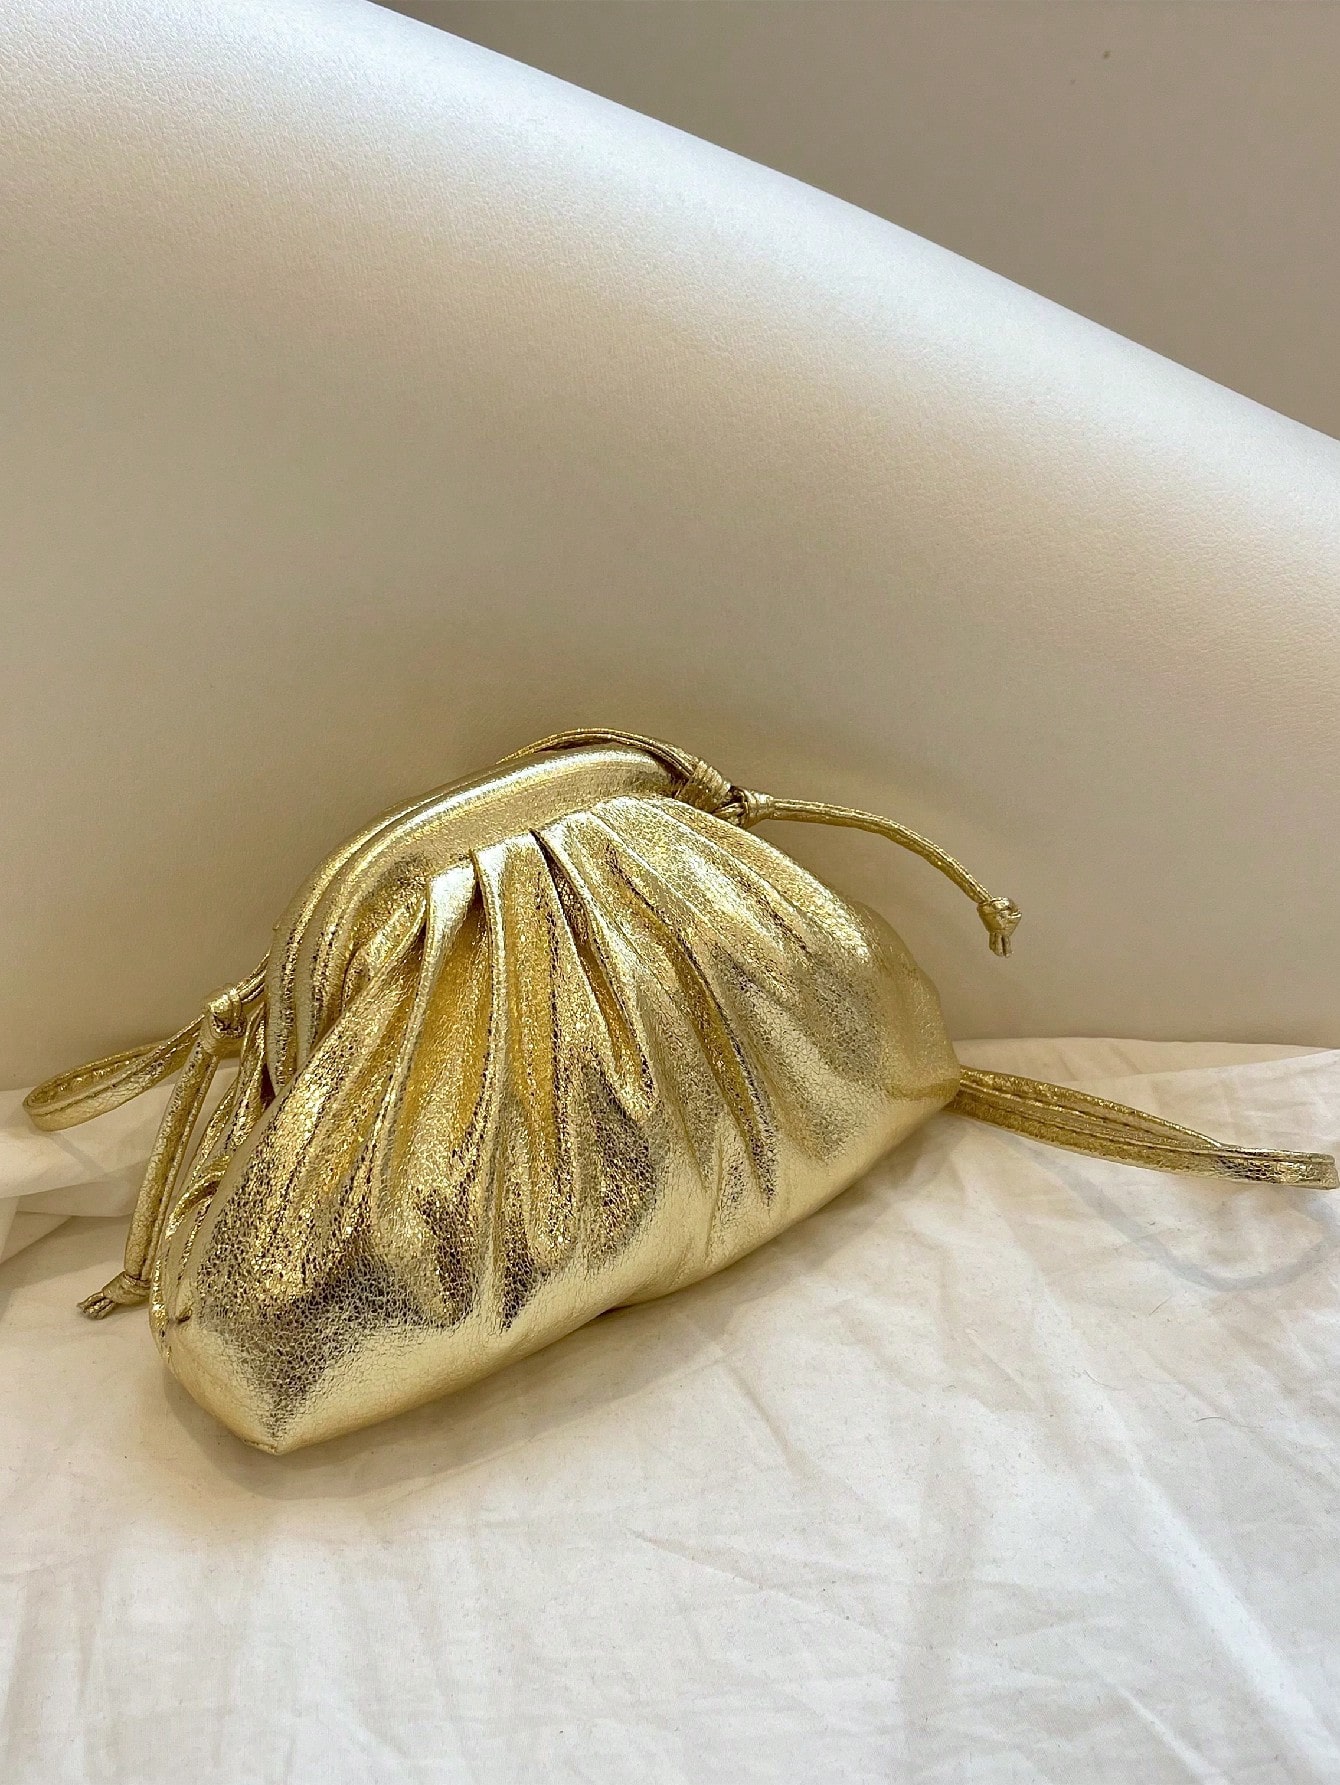 цена Мини-сумка со складками Ярко-розовый металлик Полиуретан в стиле фанк, золото